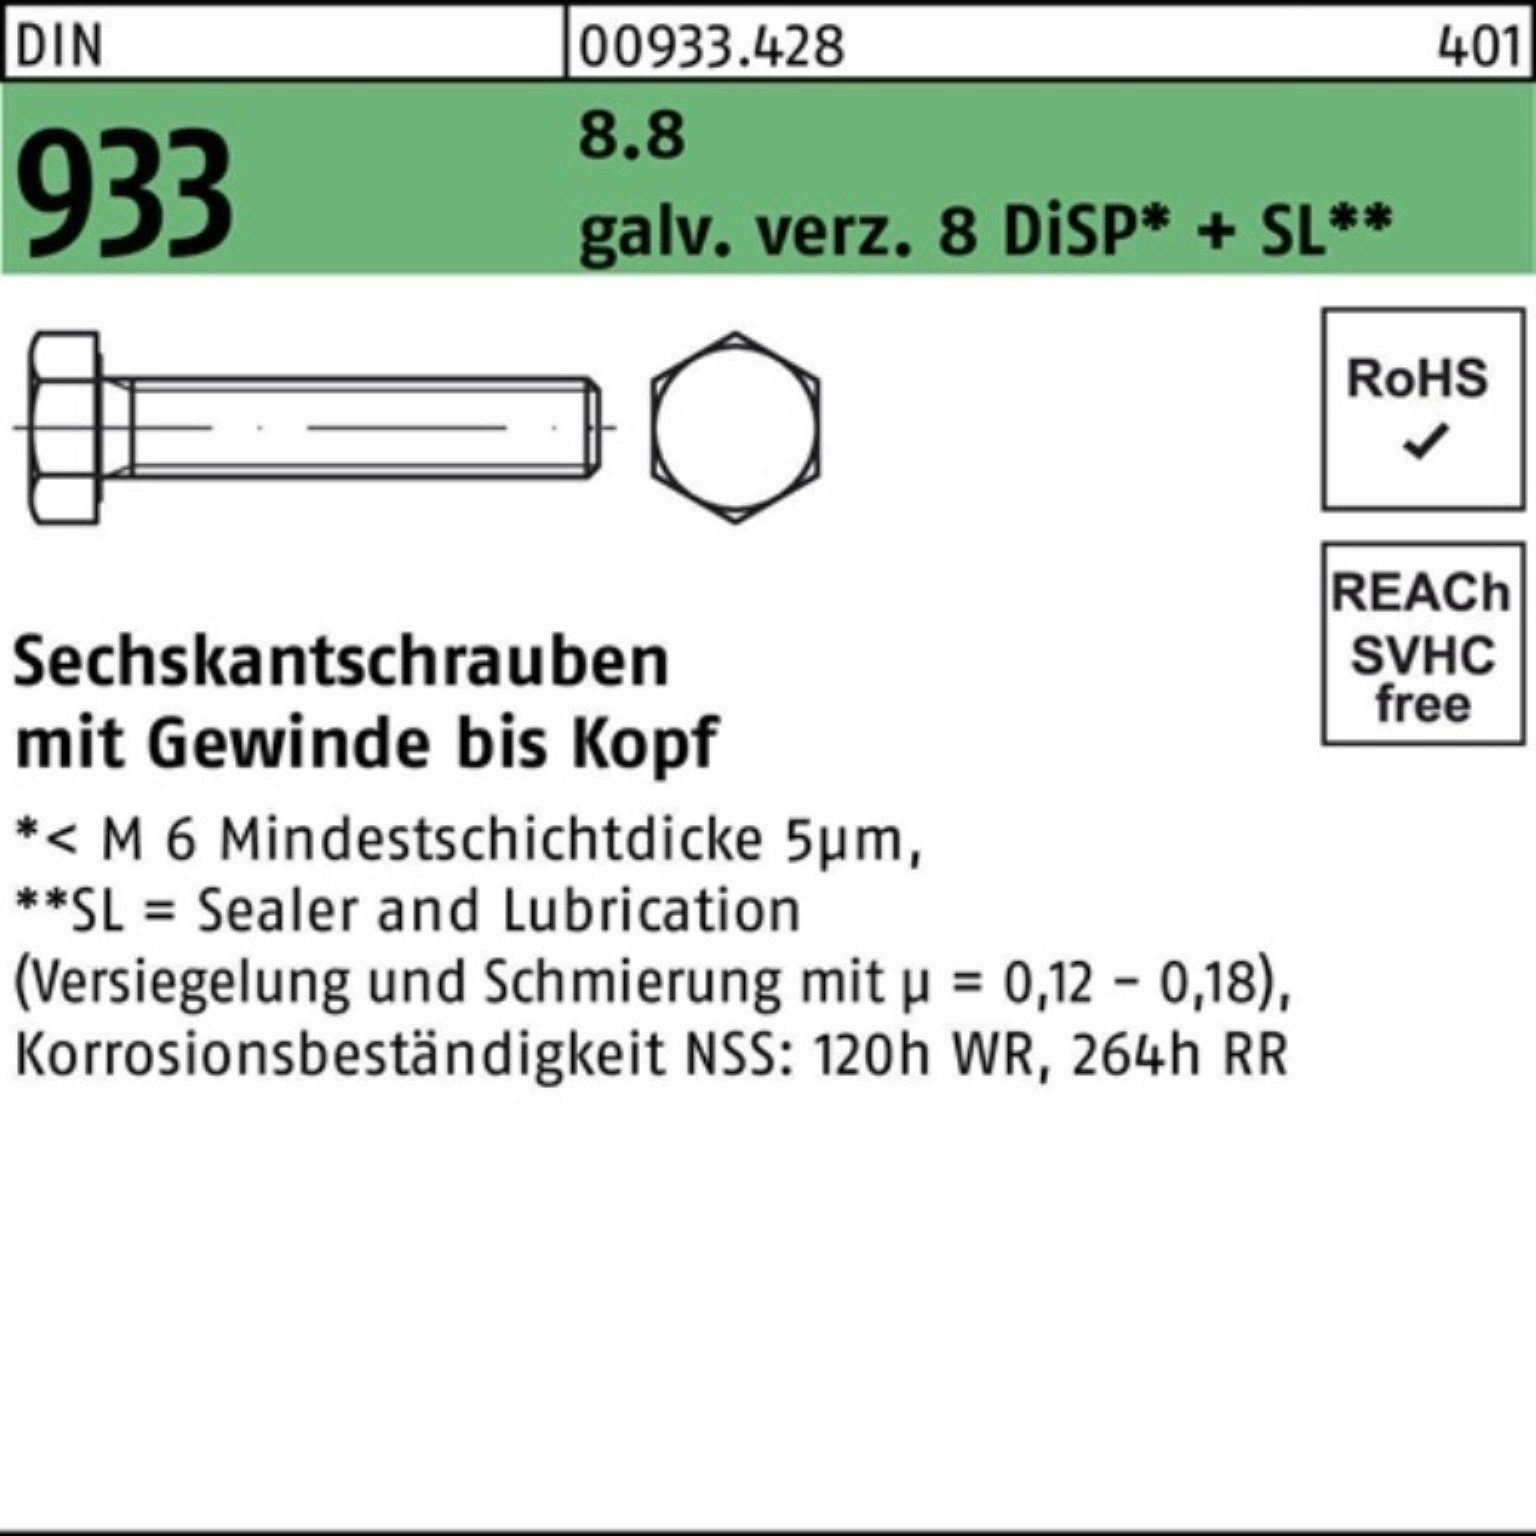 Reyher Sechskantschraube Sechskantschraube + Pack DIN 120 DiSP Zn S 933 VG gal M16x 100er 8.8 8